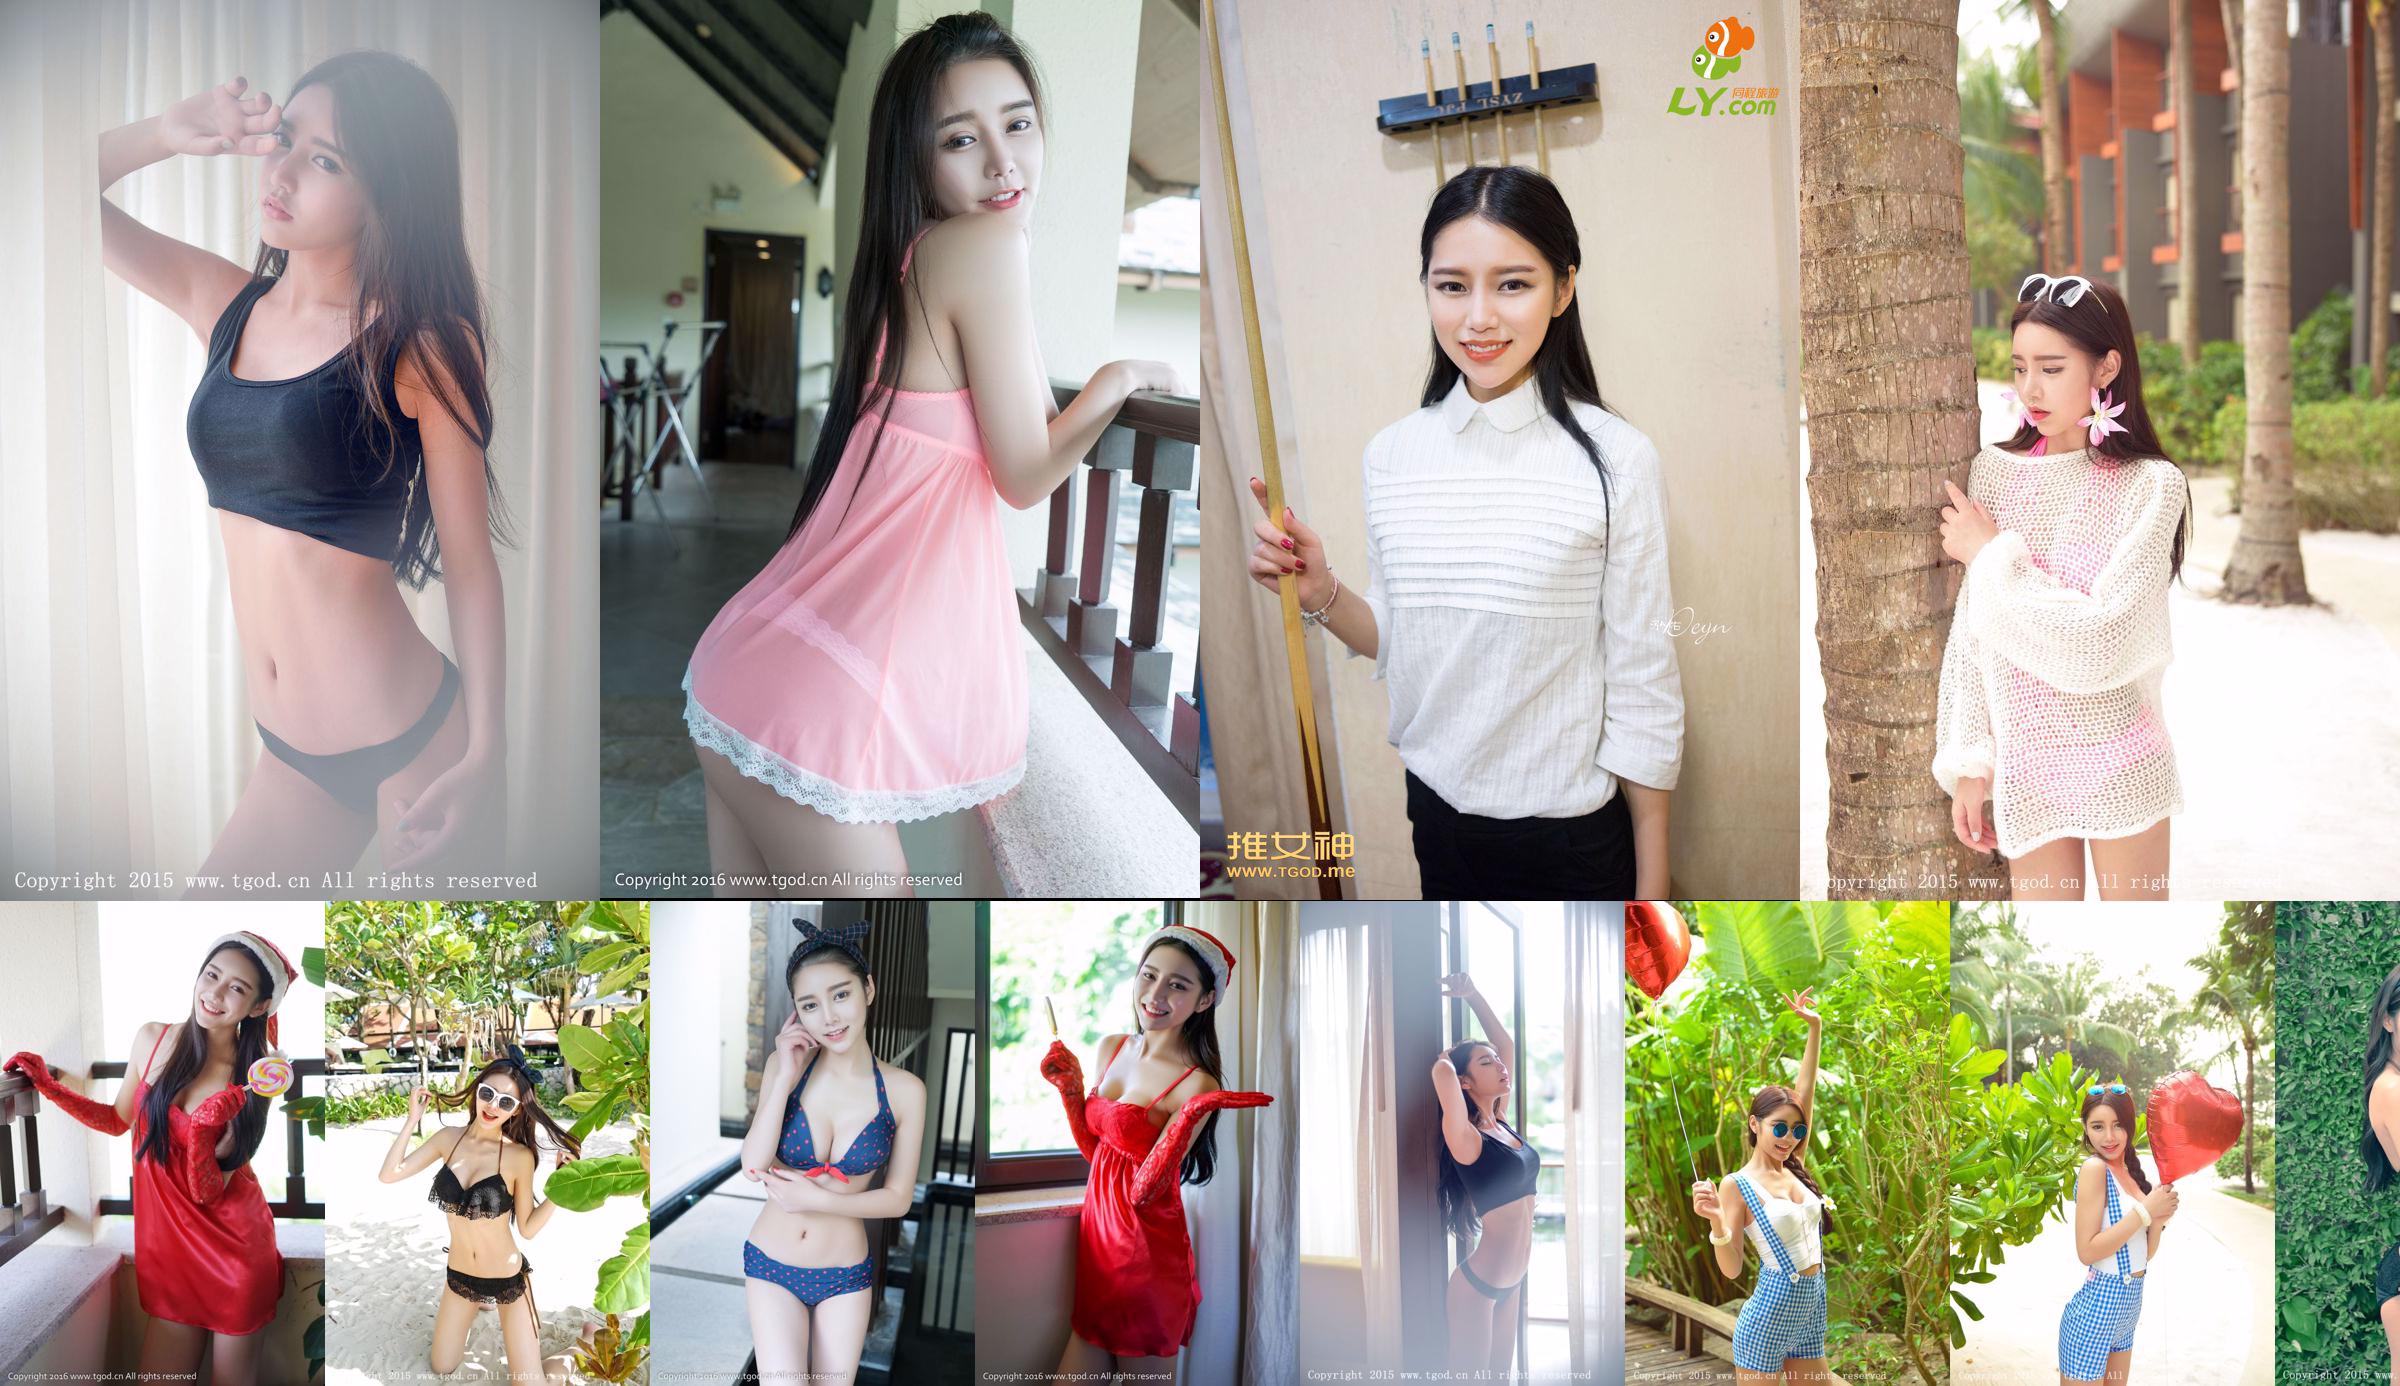 Xu Yanxin Mandy, "Phuket Travel Shooting", the goddess of suspenders and shorts No.b51ff1 Page 2